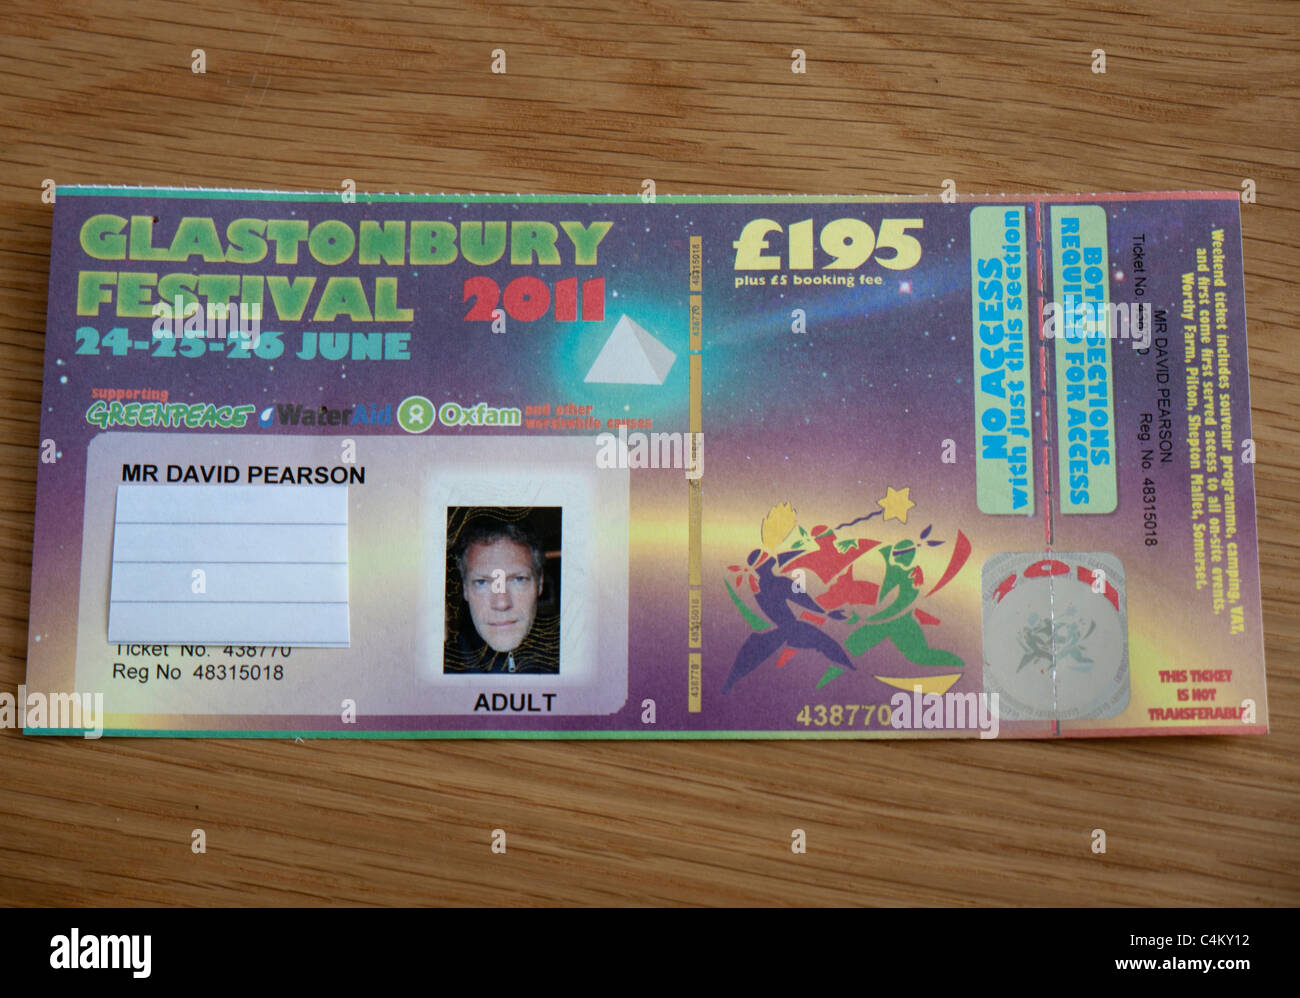 Glastonbury Festival ticket Stock Photo - Alamy